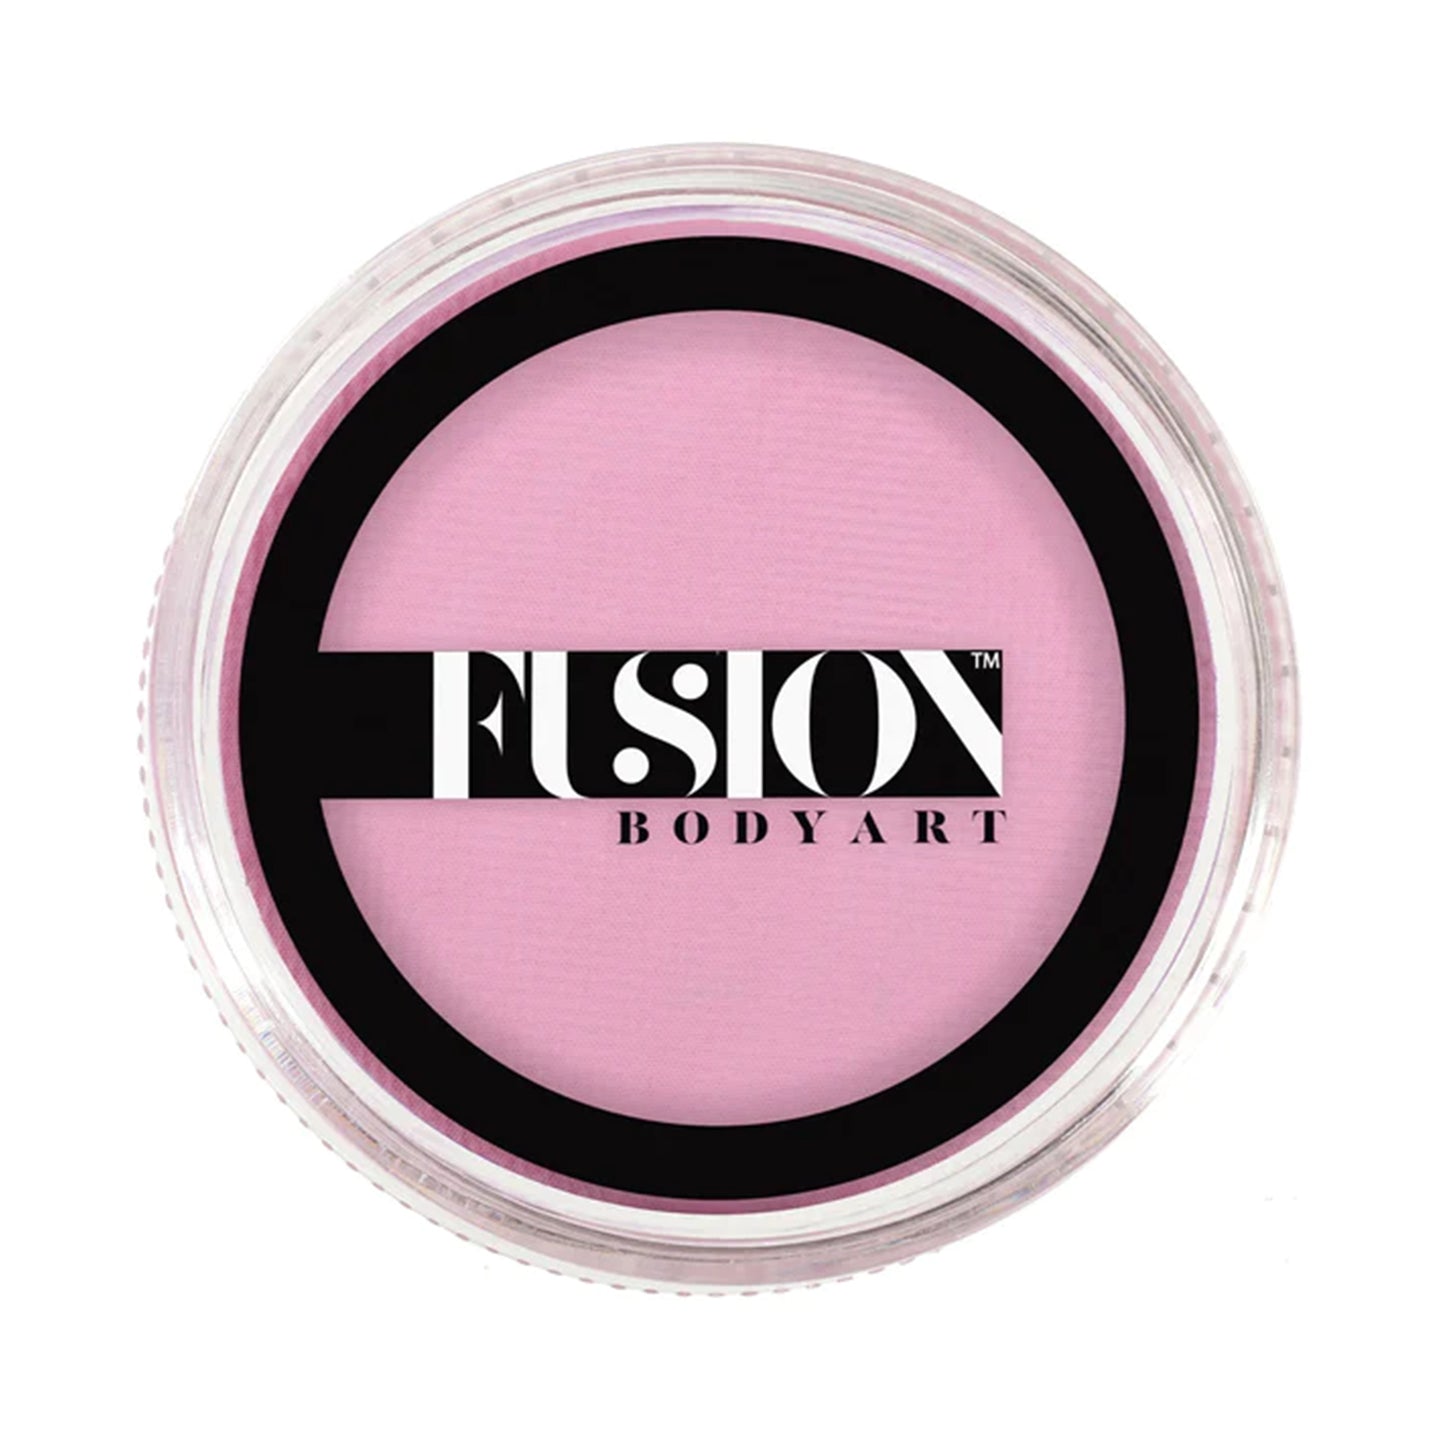 Fusion Body Art Face & Body Paint - Prime Pastel Pink (32 gm)